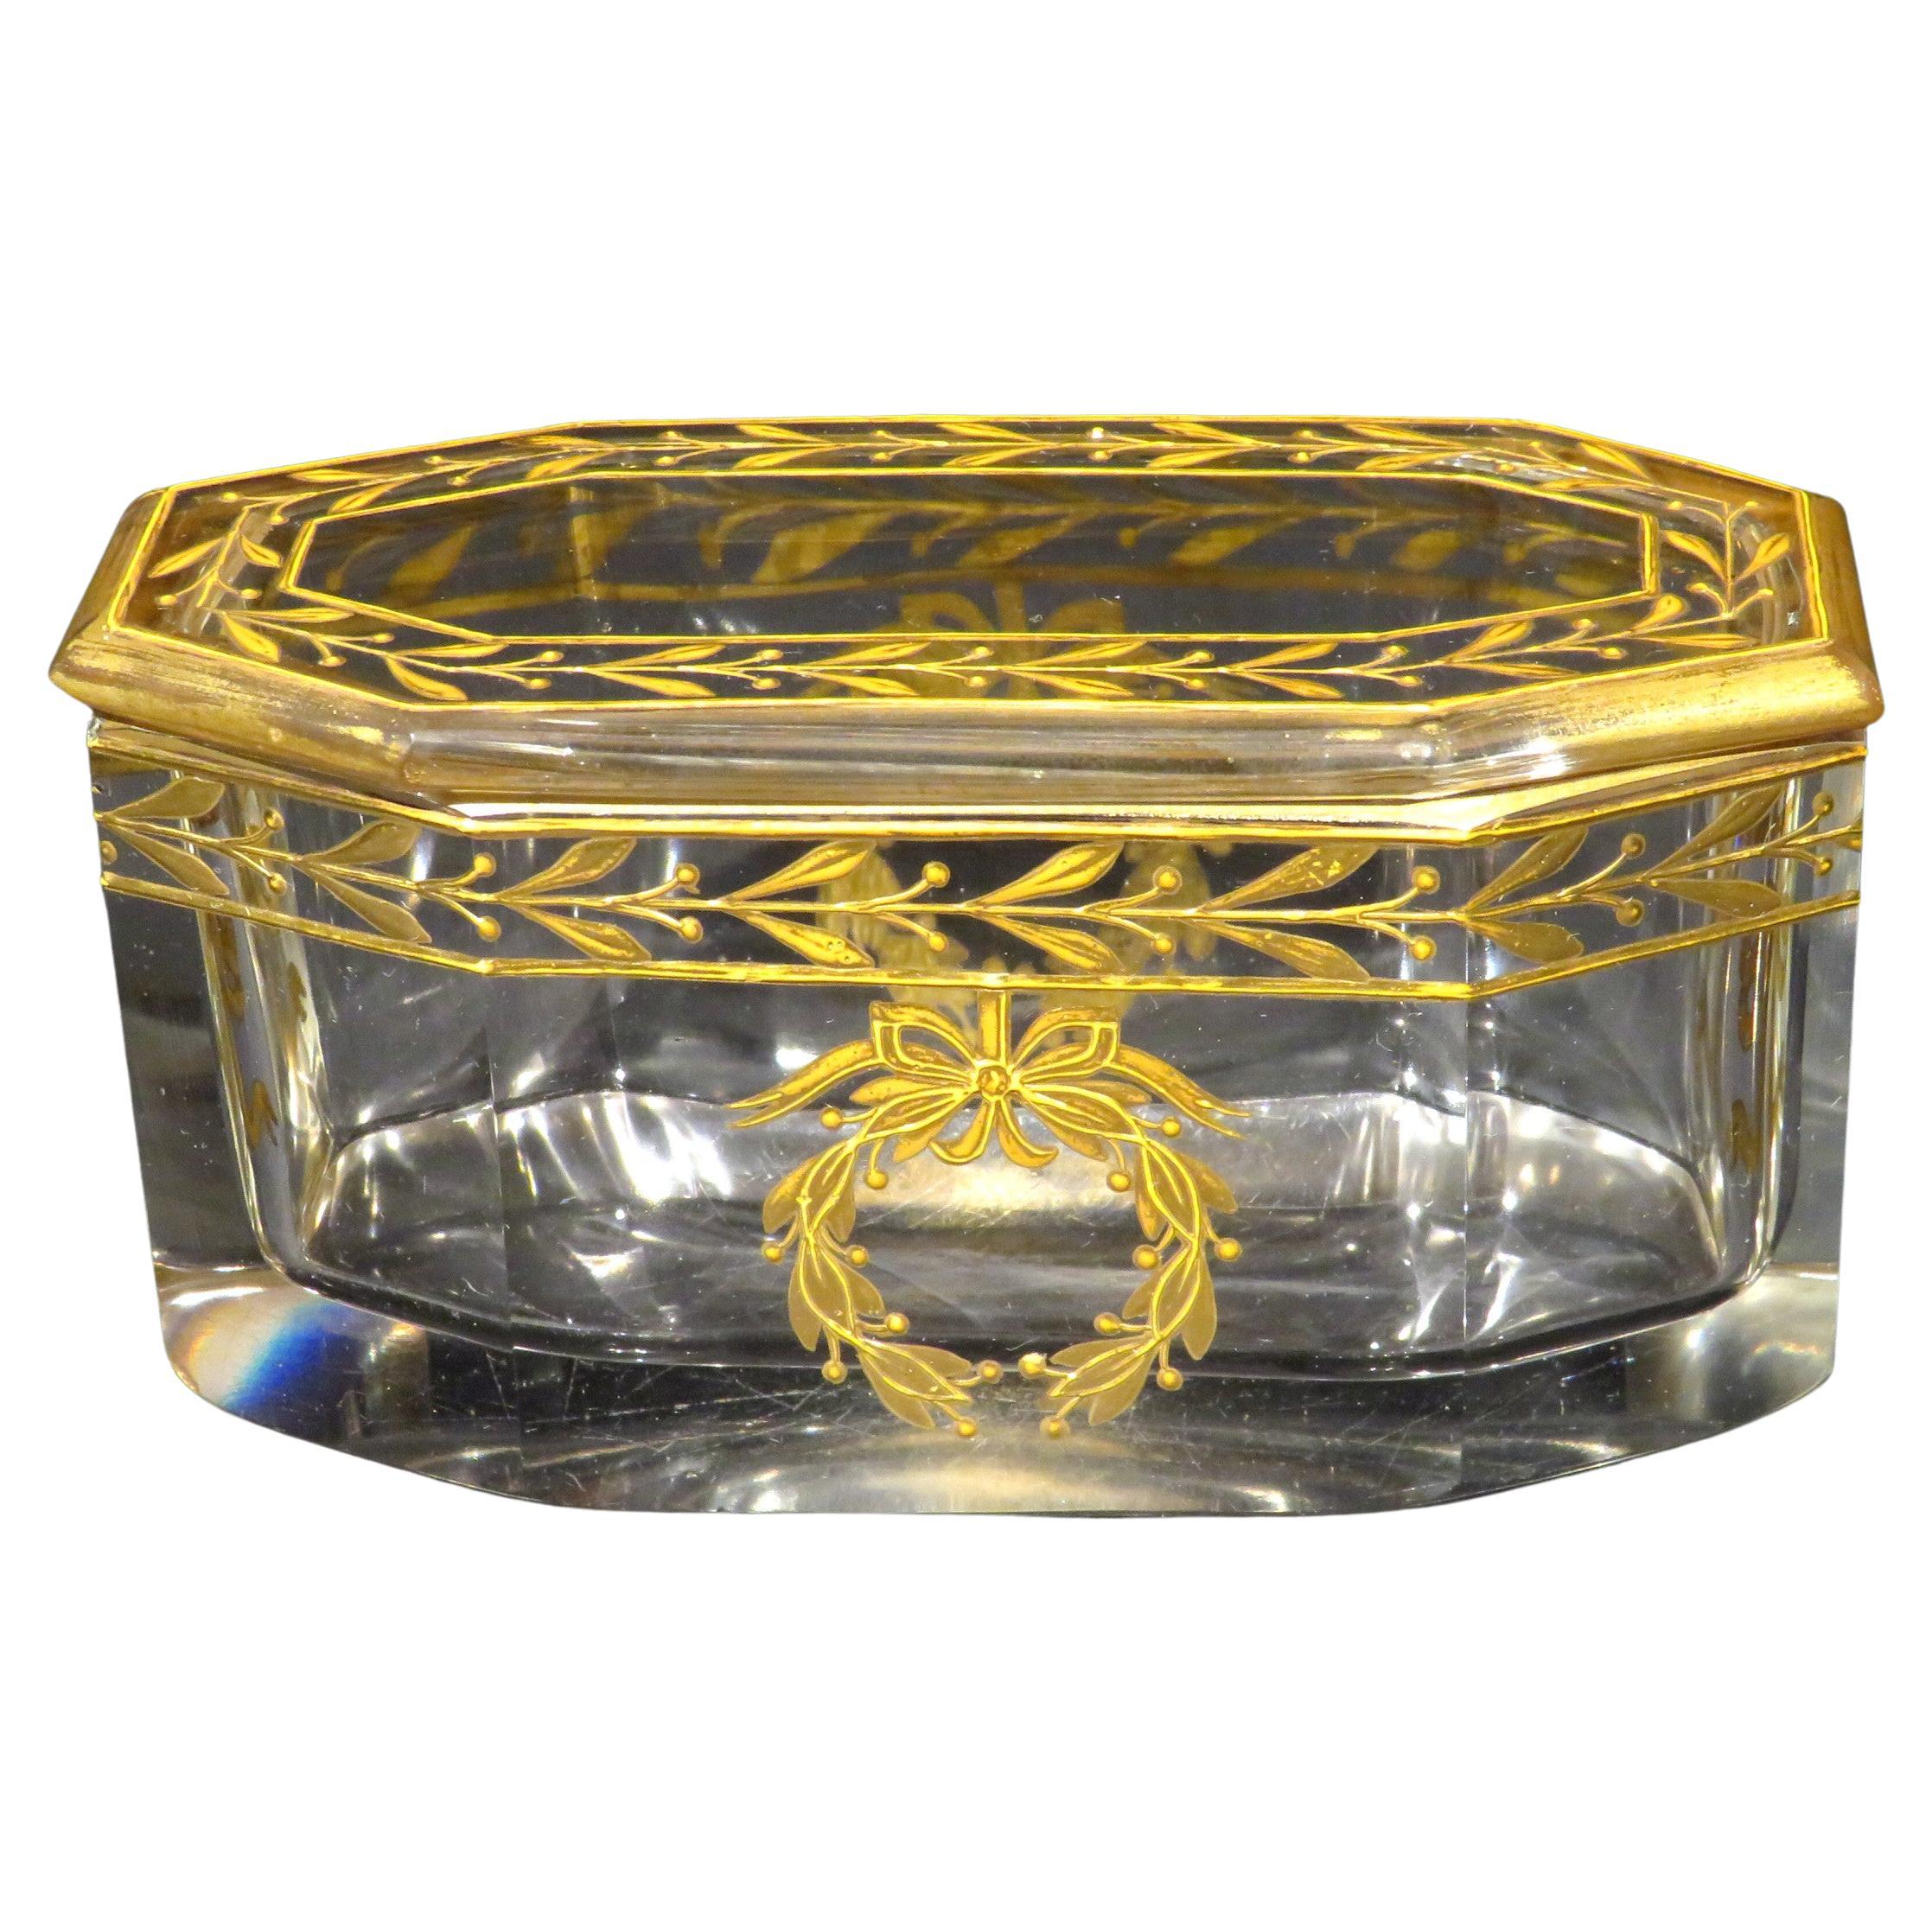 Fine Early 20th Century Gilt Decorated Glass Dresser Jar or Box, Circa 1920